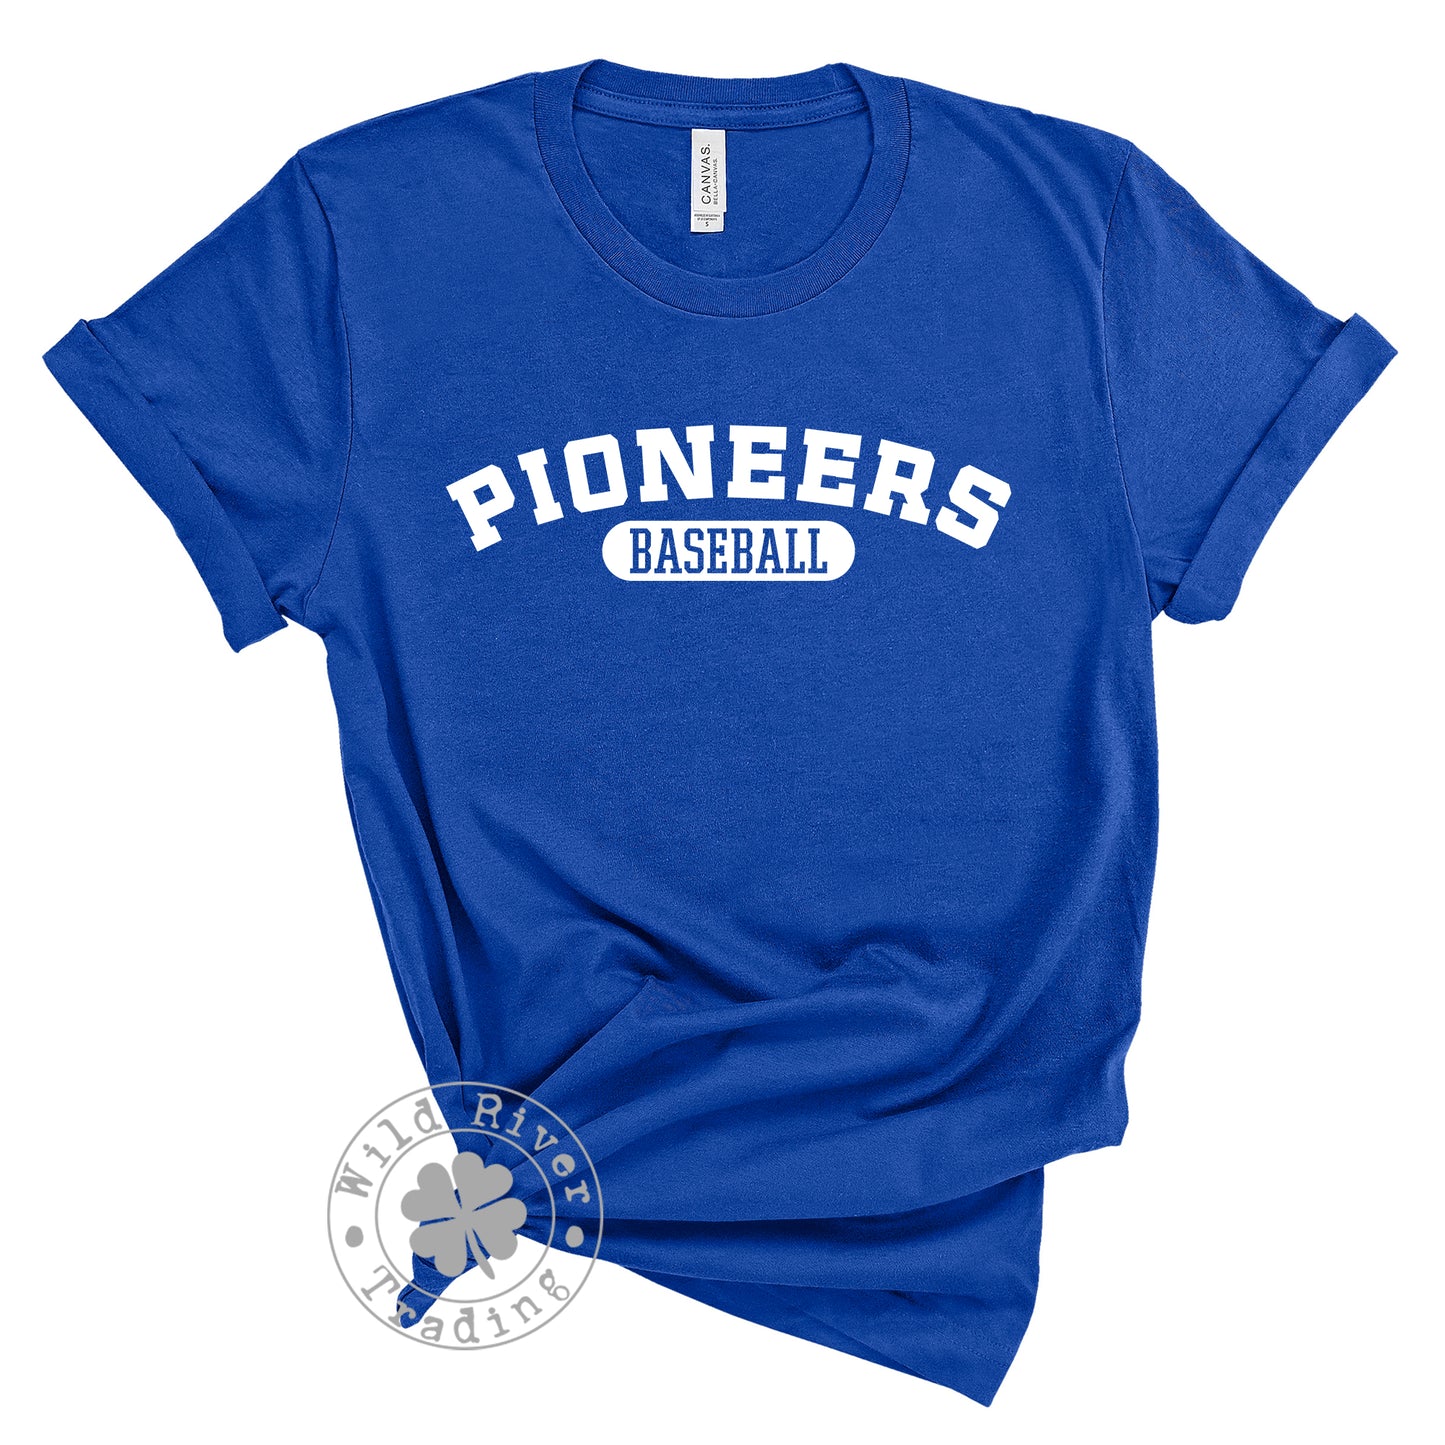 Pioneers Baseball T-shirt